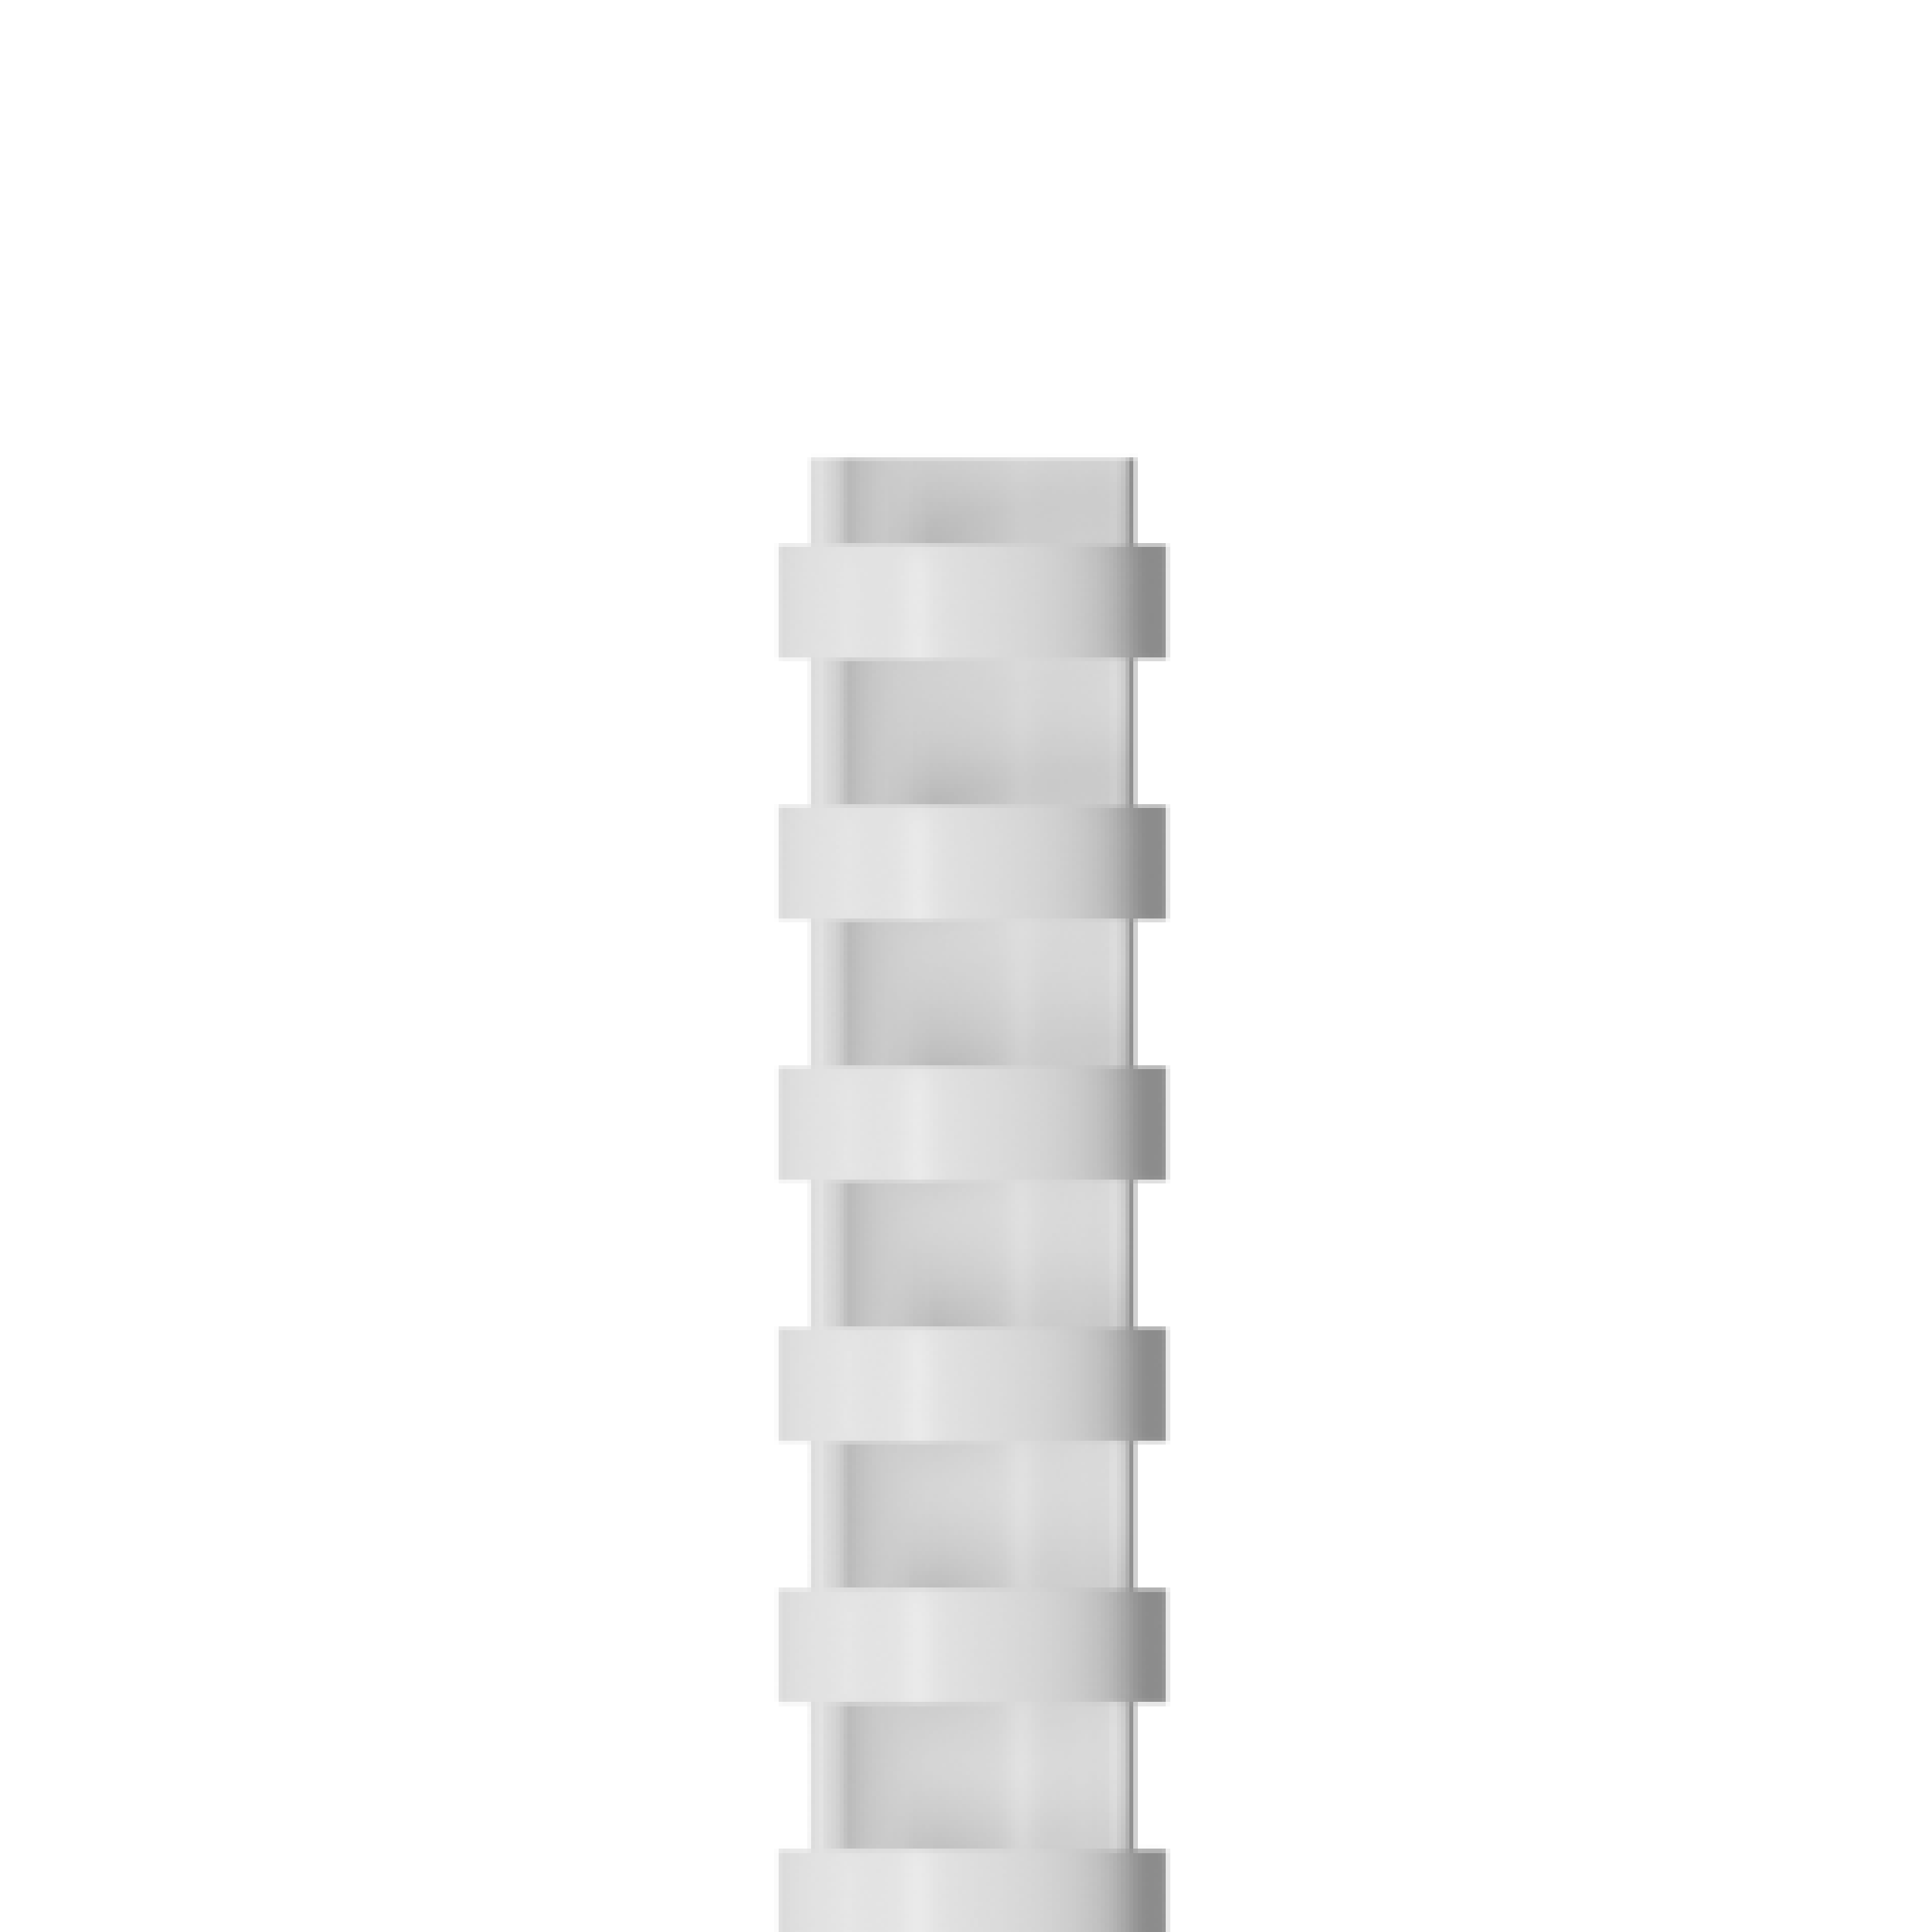 RAADO 20mm Plastic Spiral Binding Comb, White